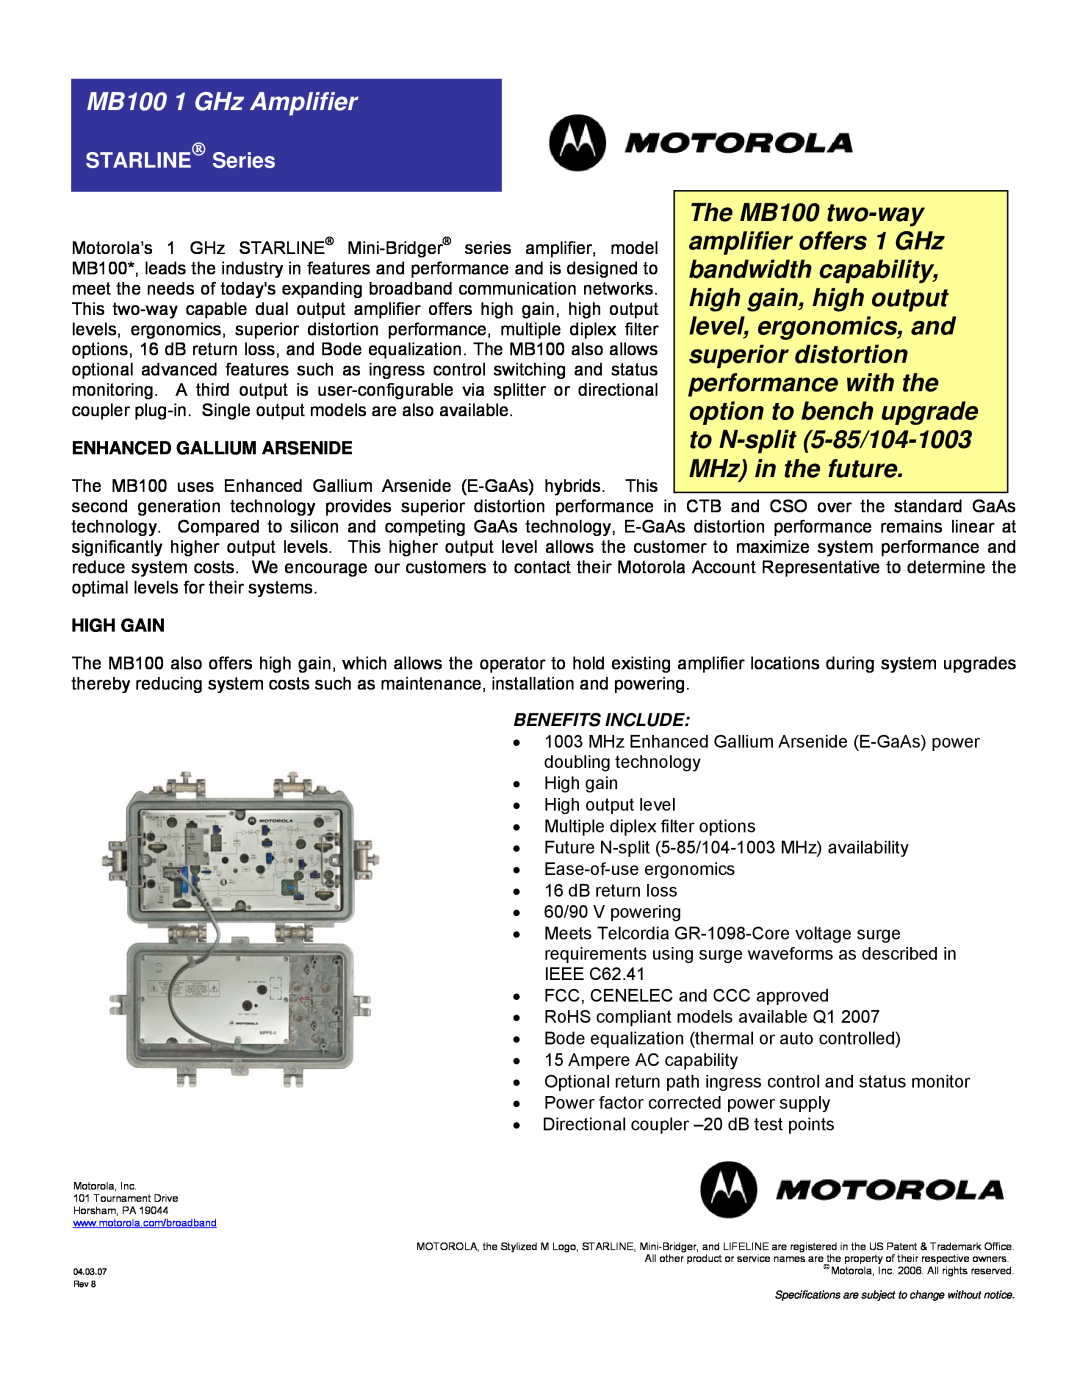 Motorola specifications STARLINE→ Series, Enhanced Gallium Arsenide, High Gain, MB100 1 GHz Amplifier, Benefits Include 